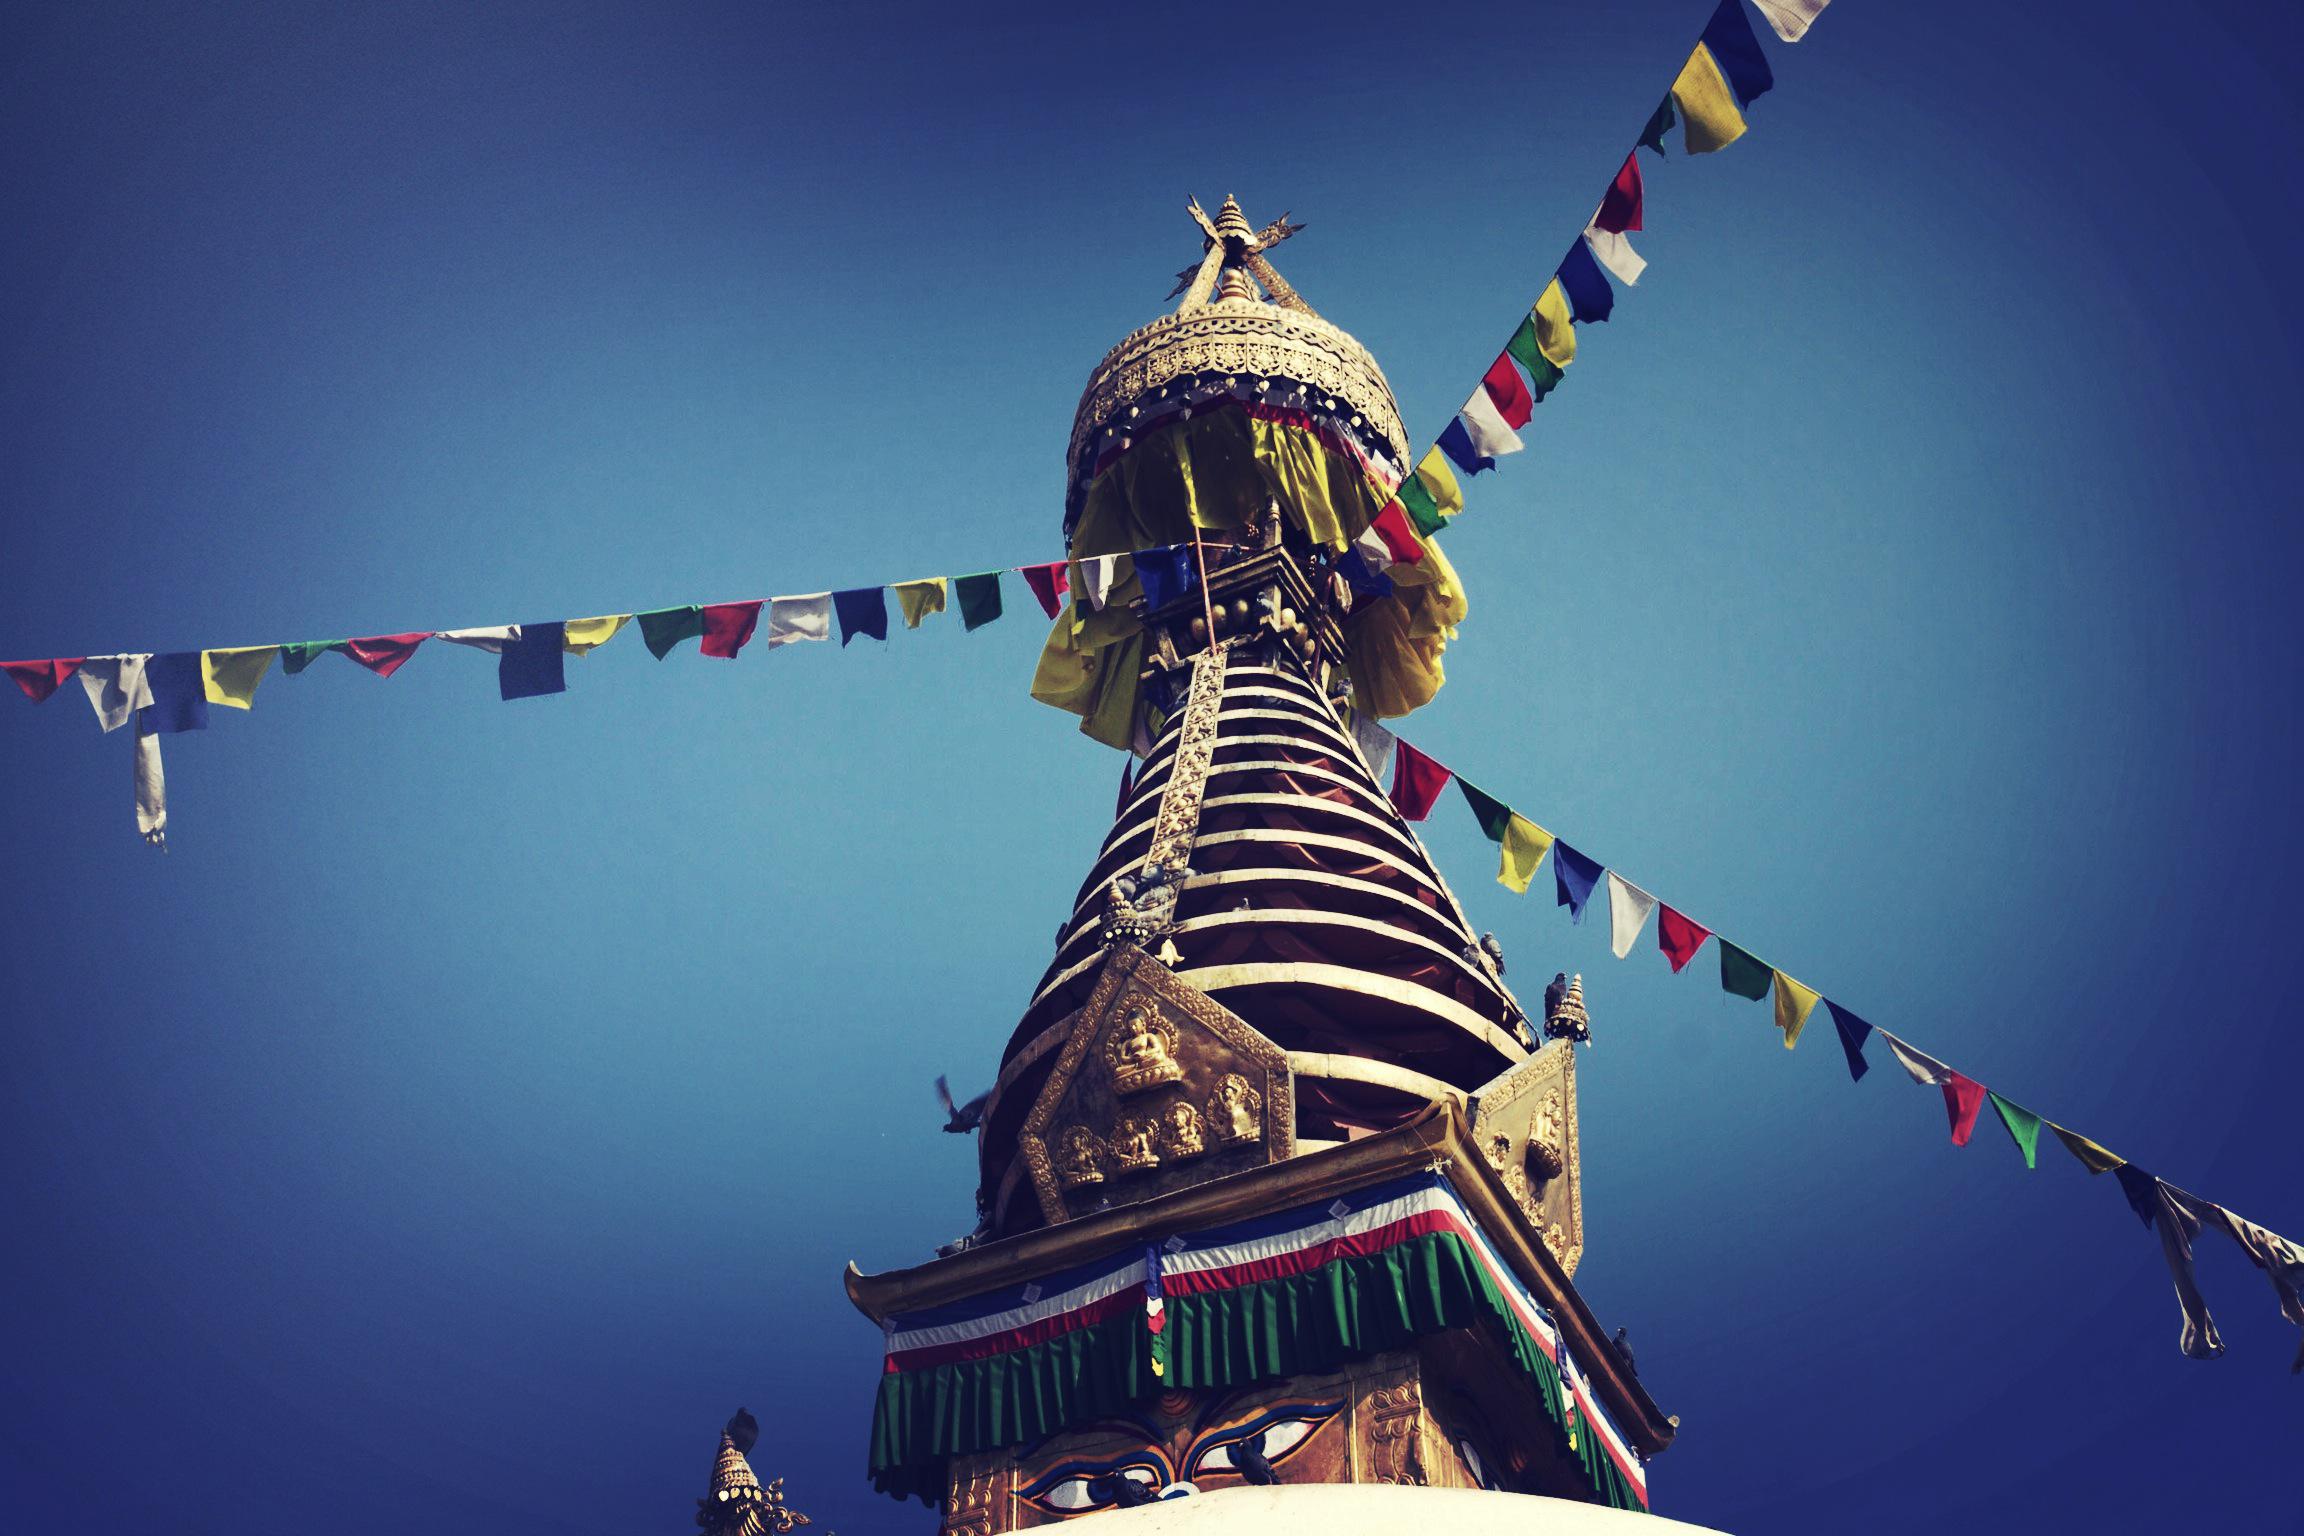 Gallery Nepal - Image 3